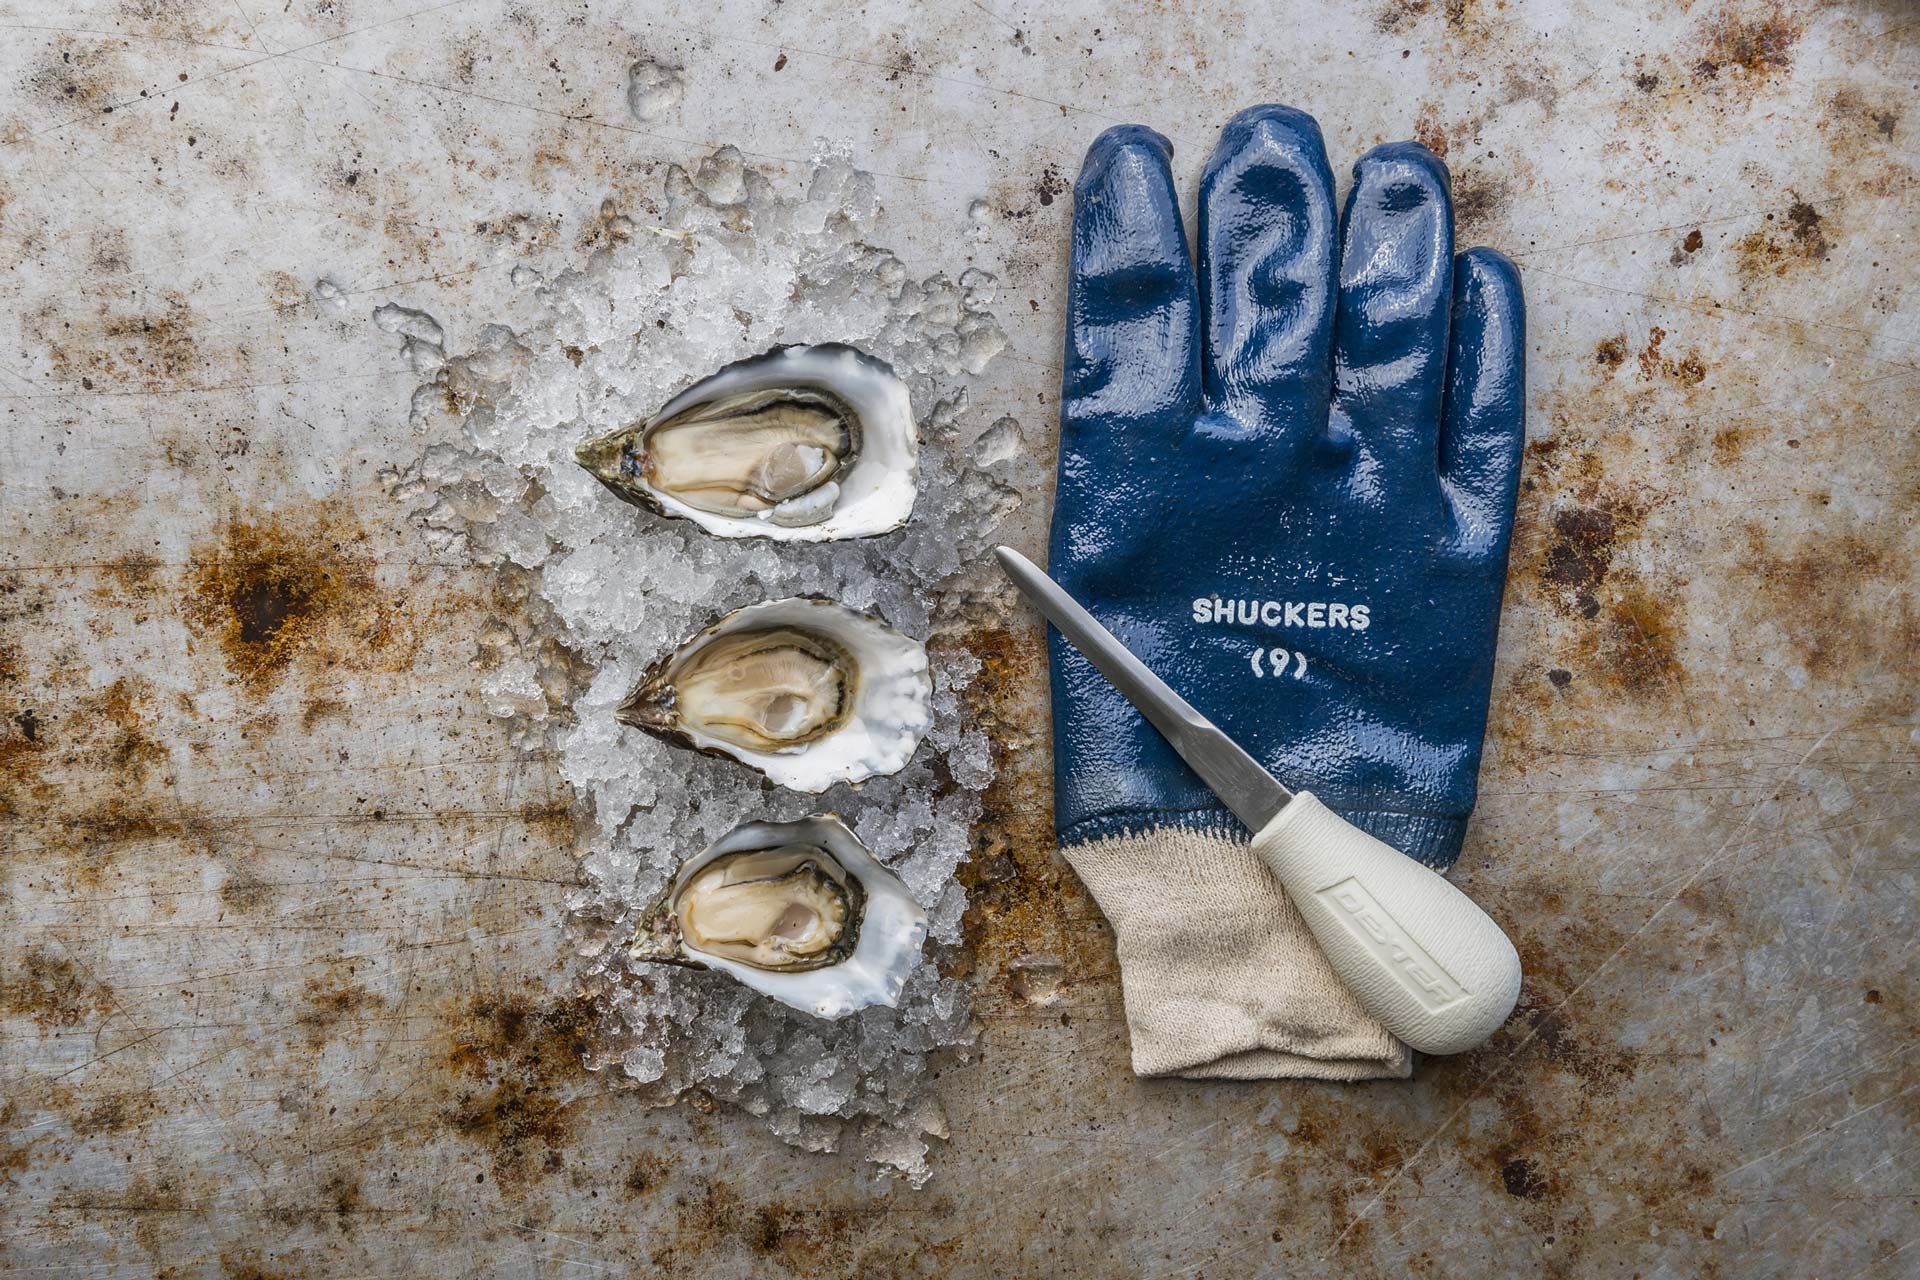 XSM-sweetwater-oysters-knife-glove-100419_0053.jpg